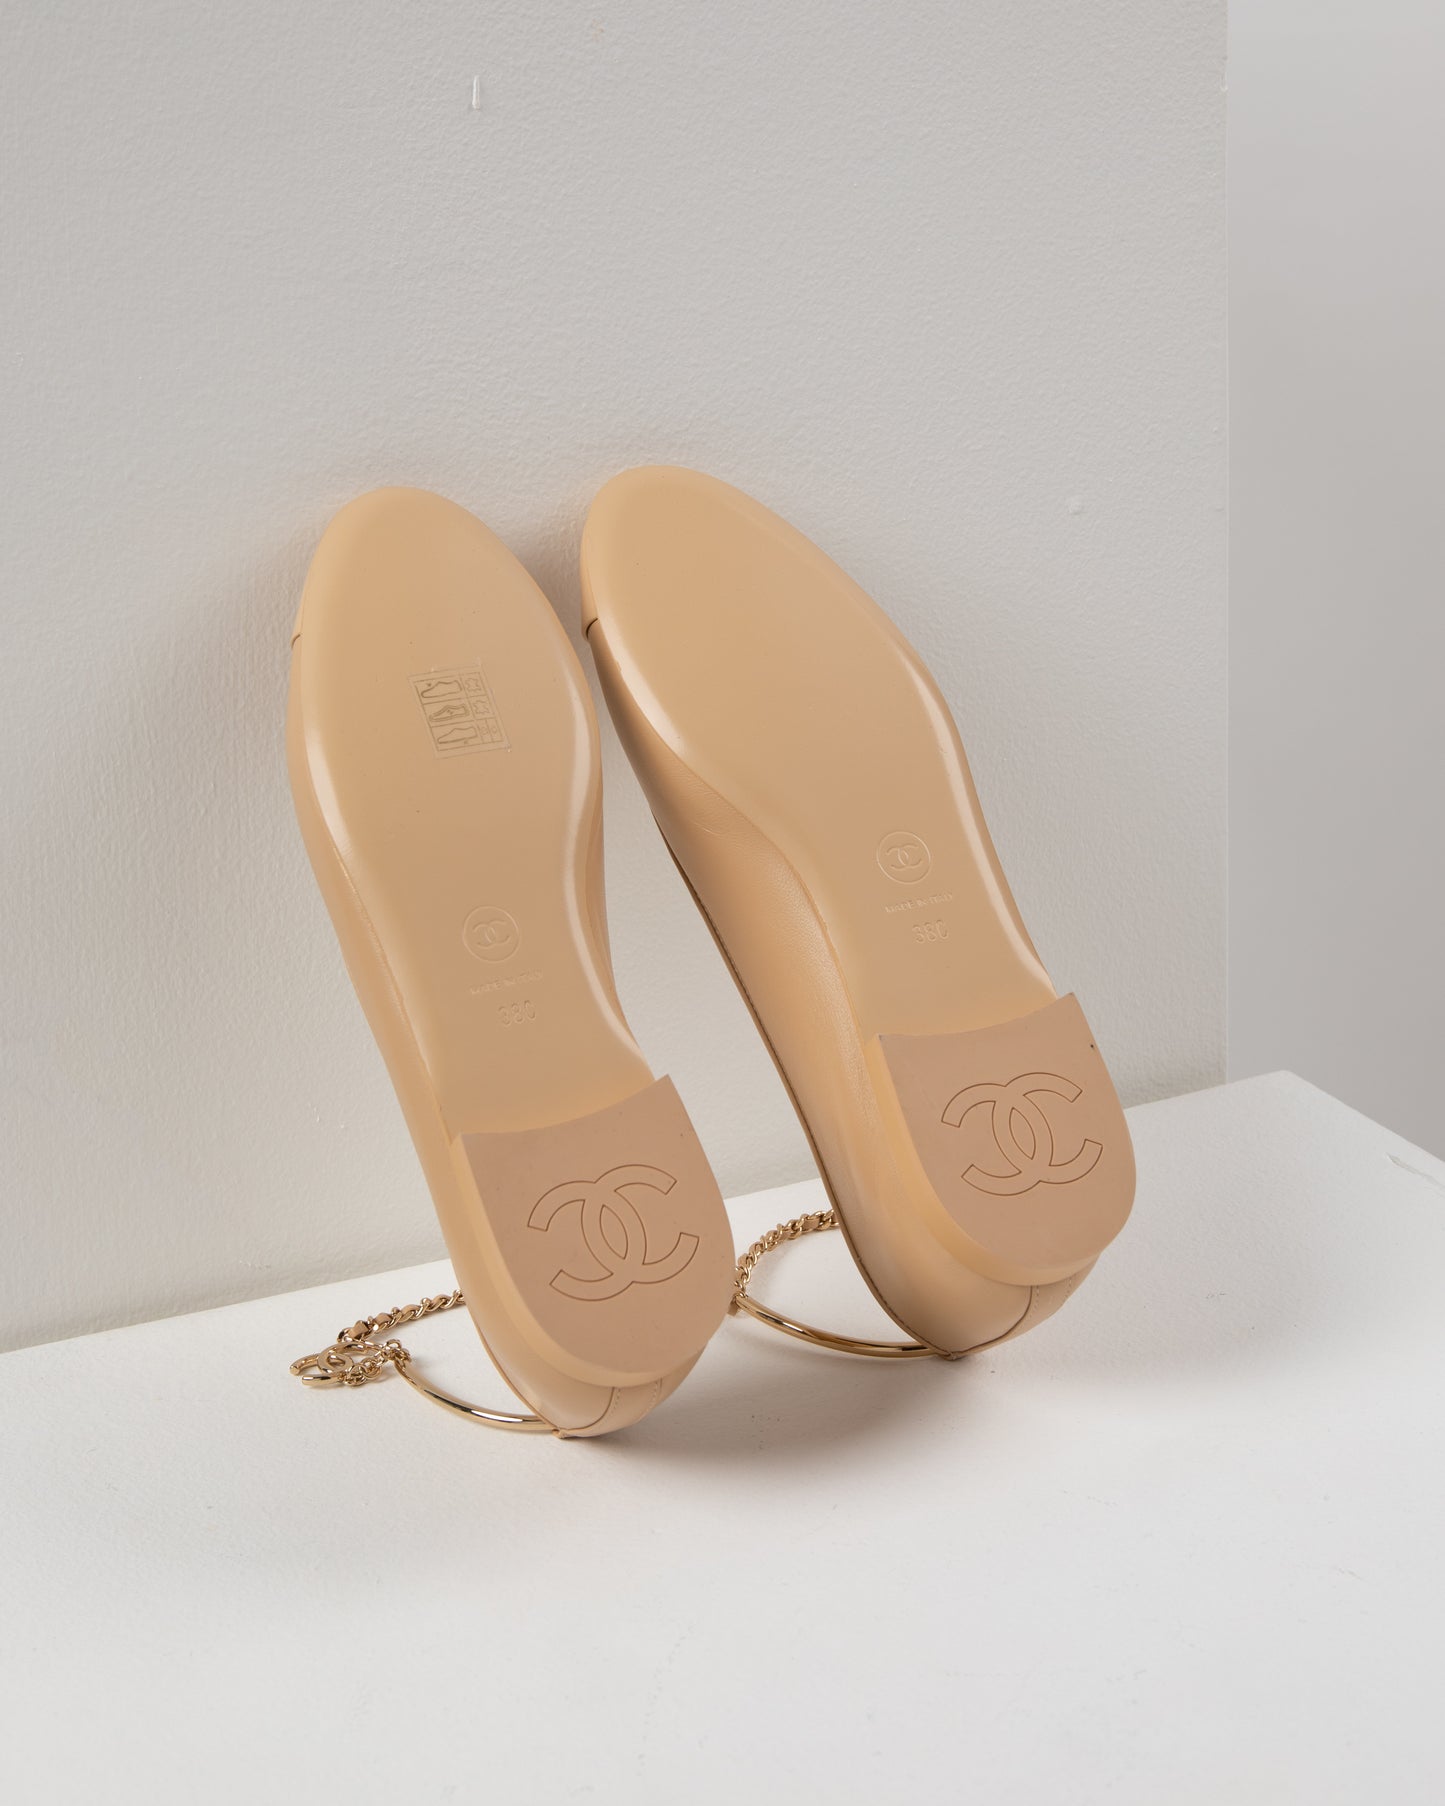 Chanel Ballerina Flat Shoes in Beige